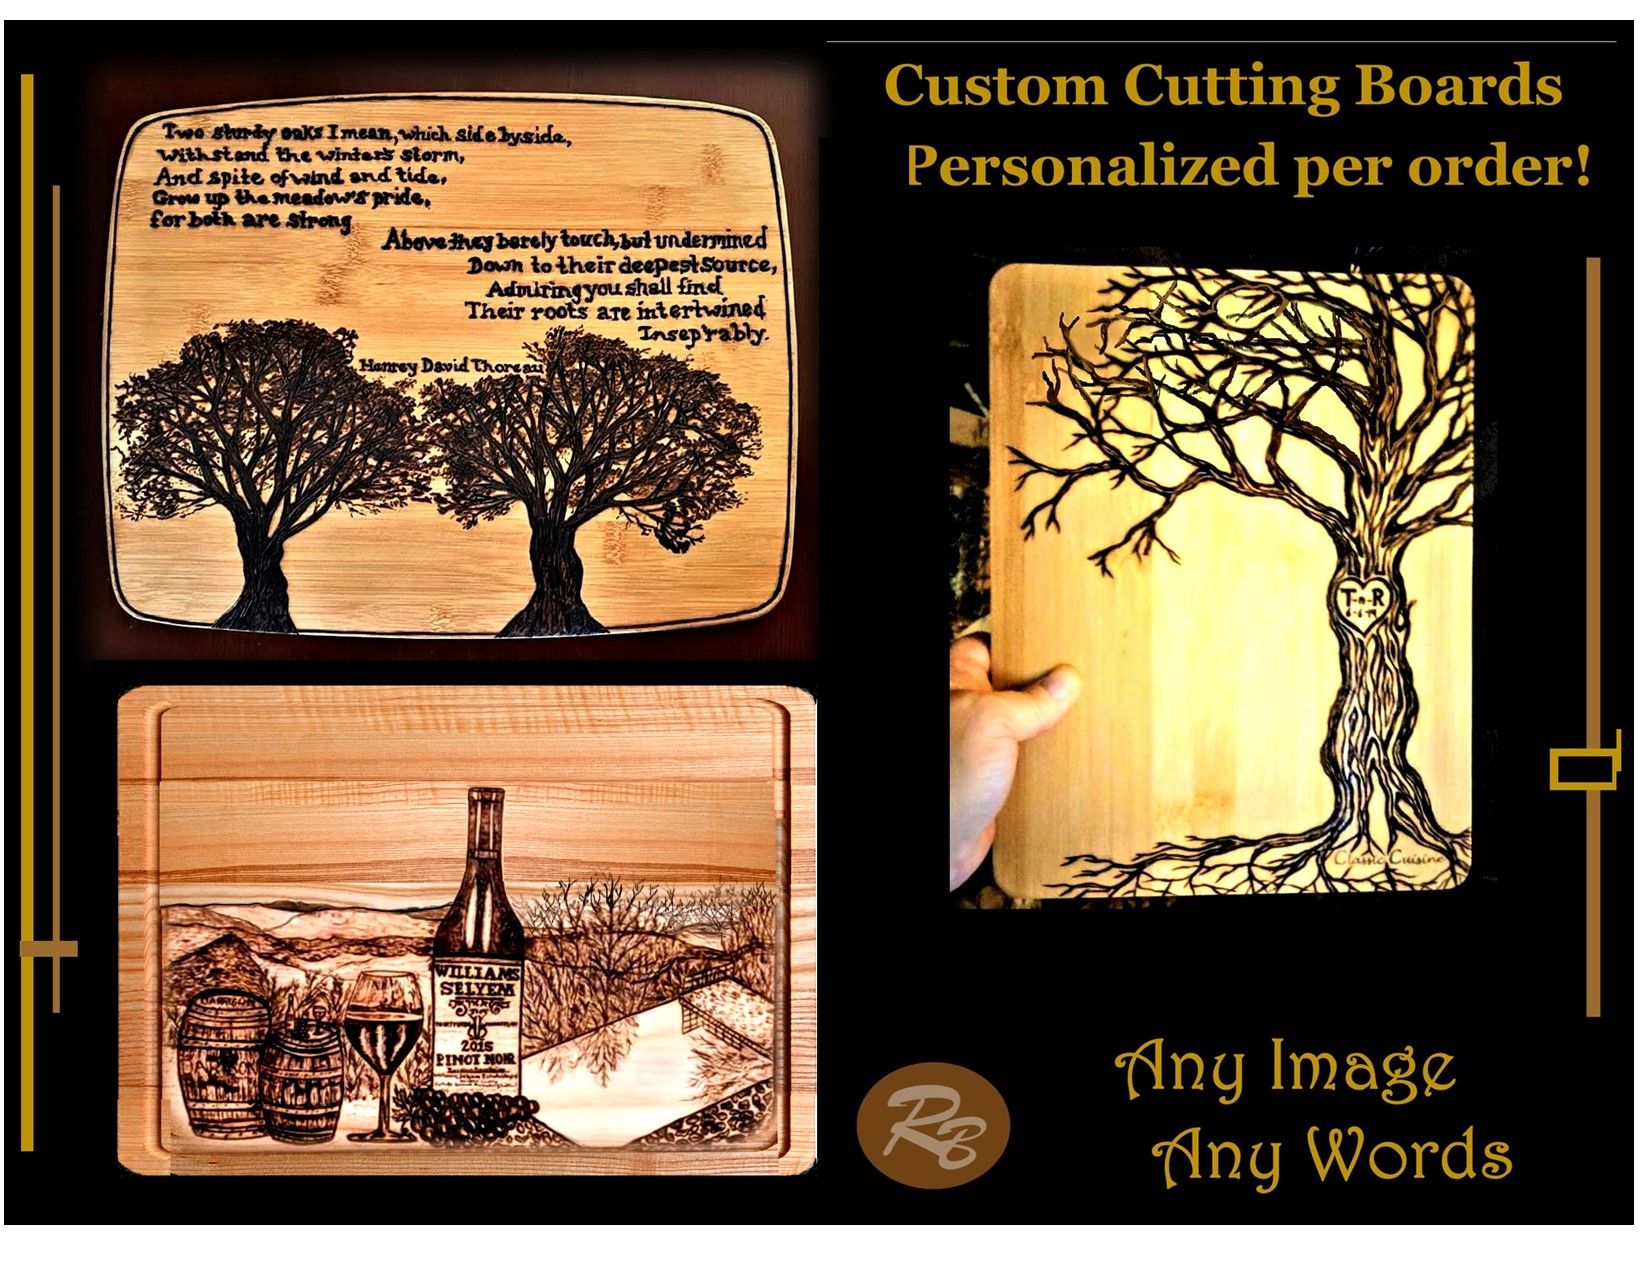 https://images.custommade.com/WHbE78TeGgUlYmRKF-pcDxtbs8w=/custommade-photosets/c90dad6f4318776_custom_cutting_board.jpg